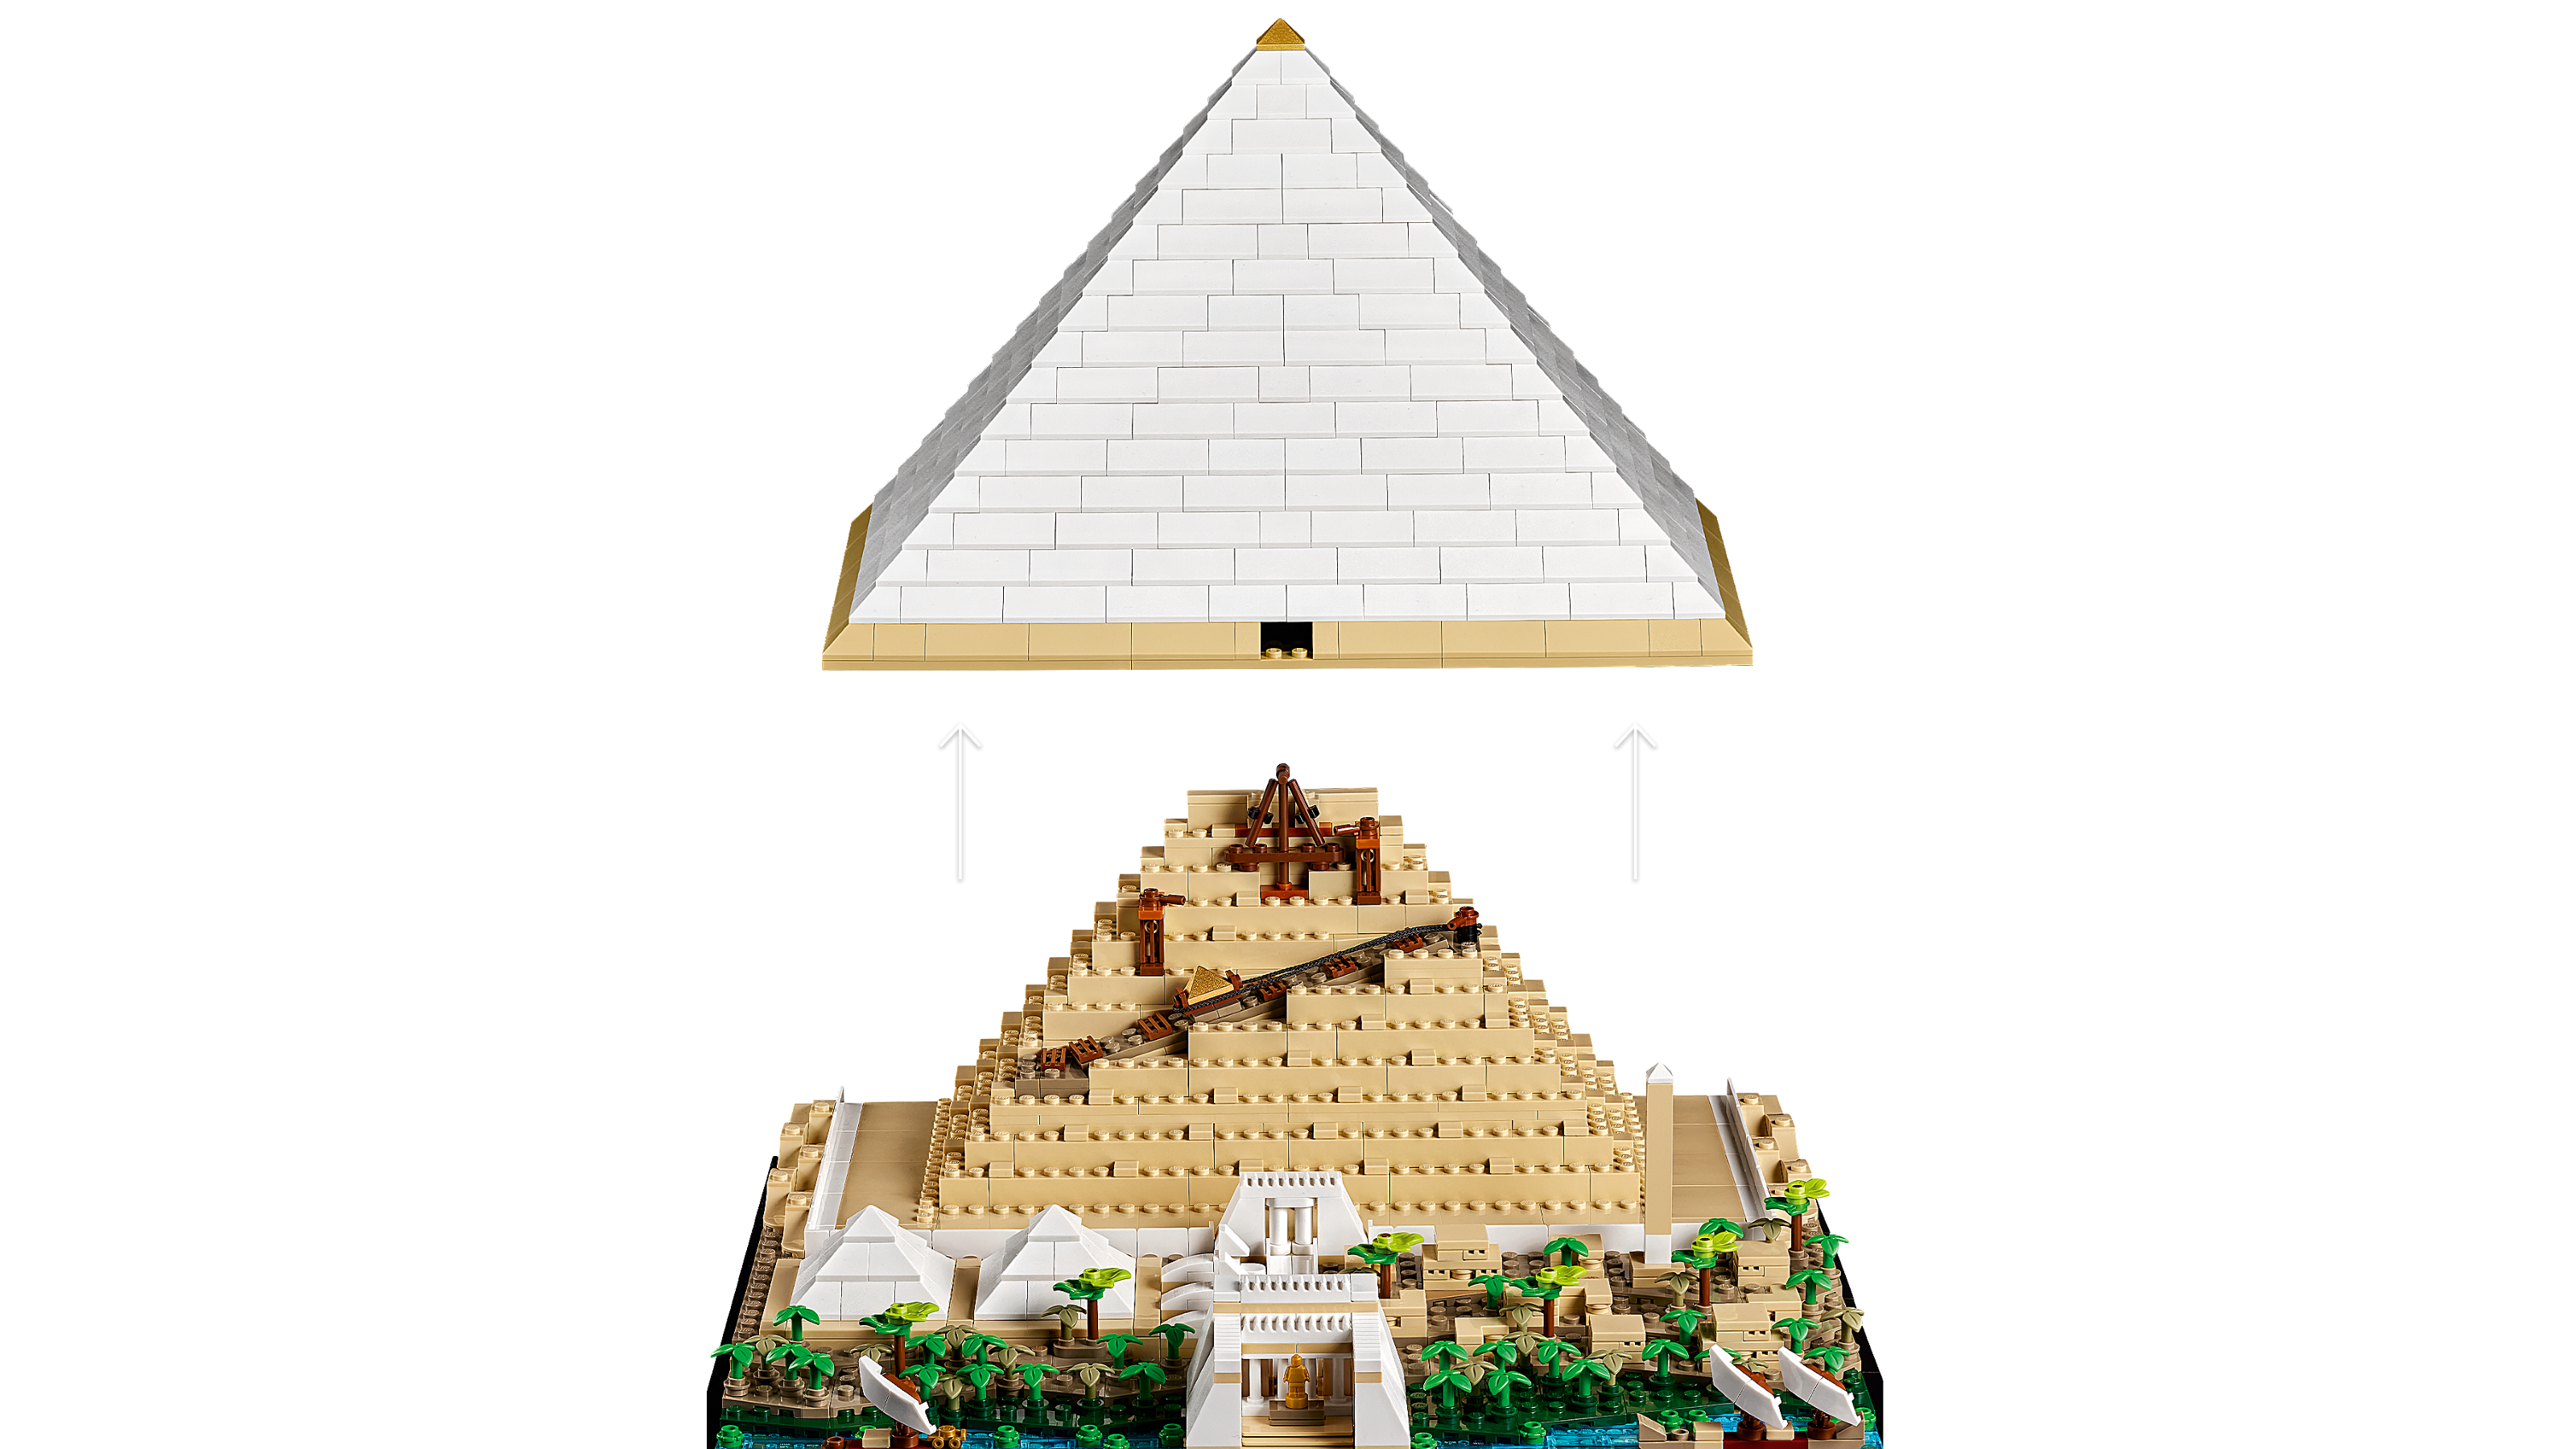 Brick Breakdown: LEGO Great Pyramid of Giza